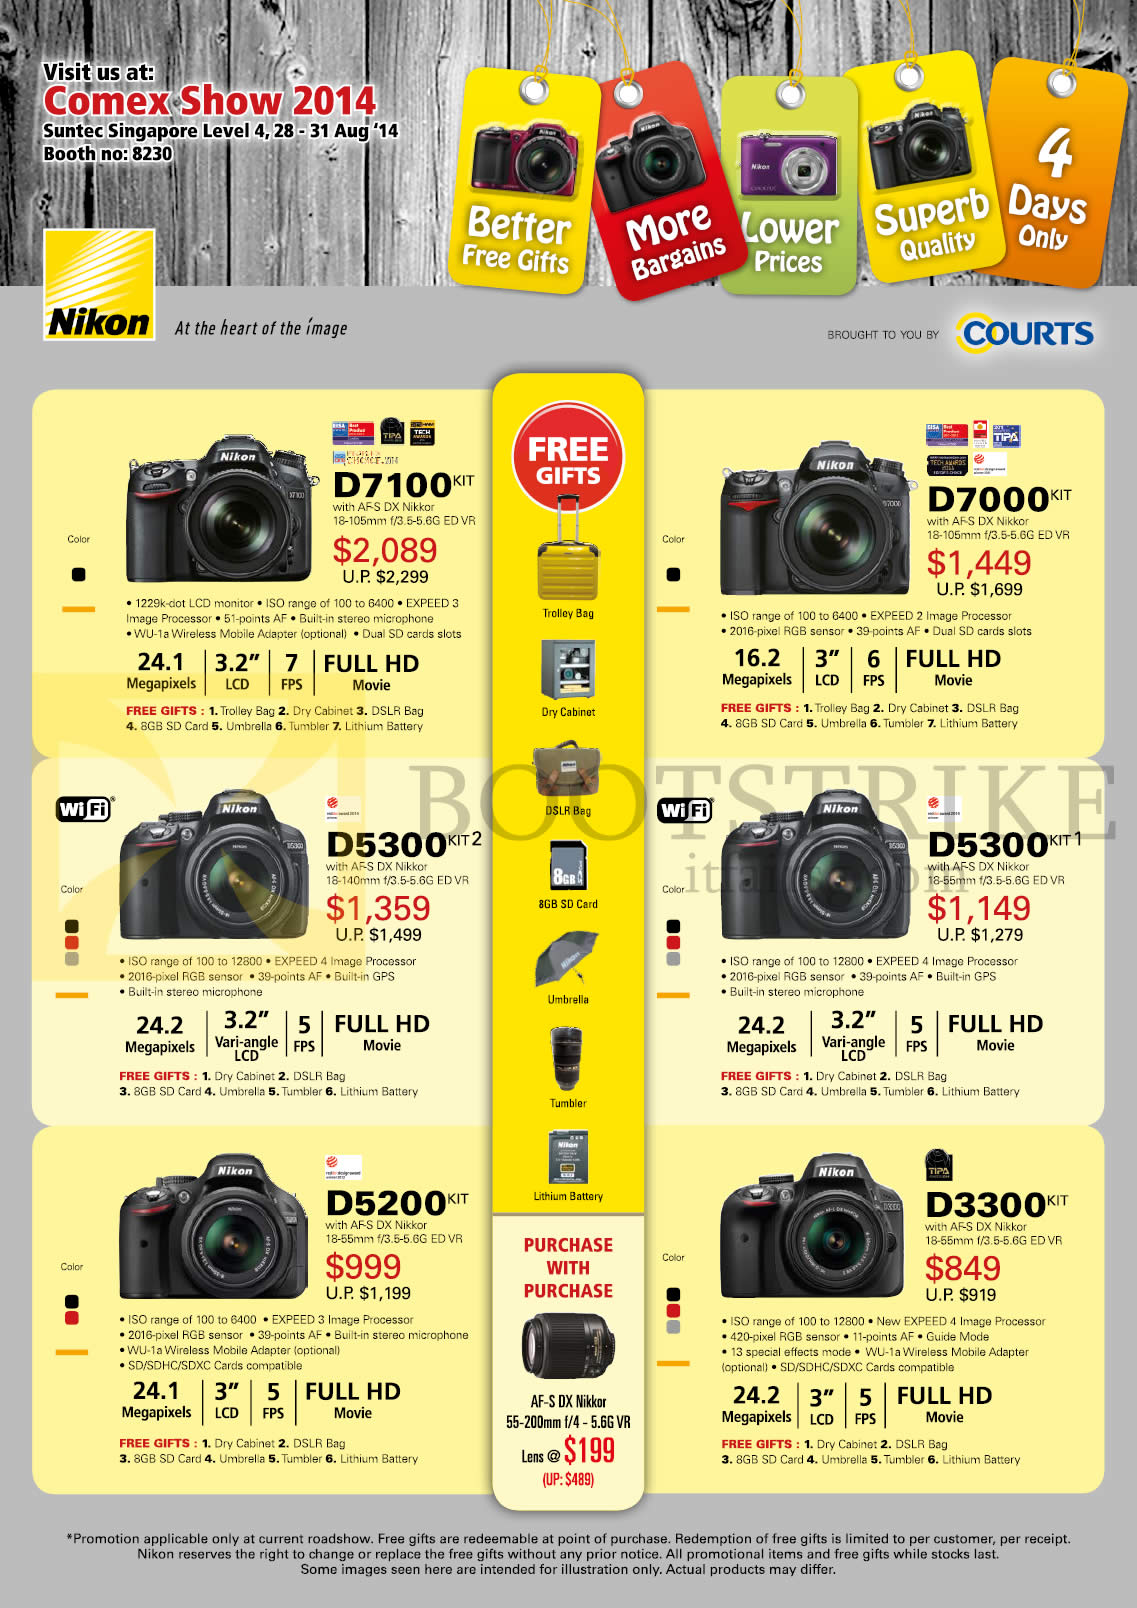 COMEX 2014 price list image brochure of Nikon Digital Cameras DSLR D7100, D7000, D5300, D5200, D3300